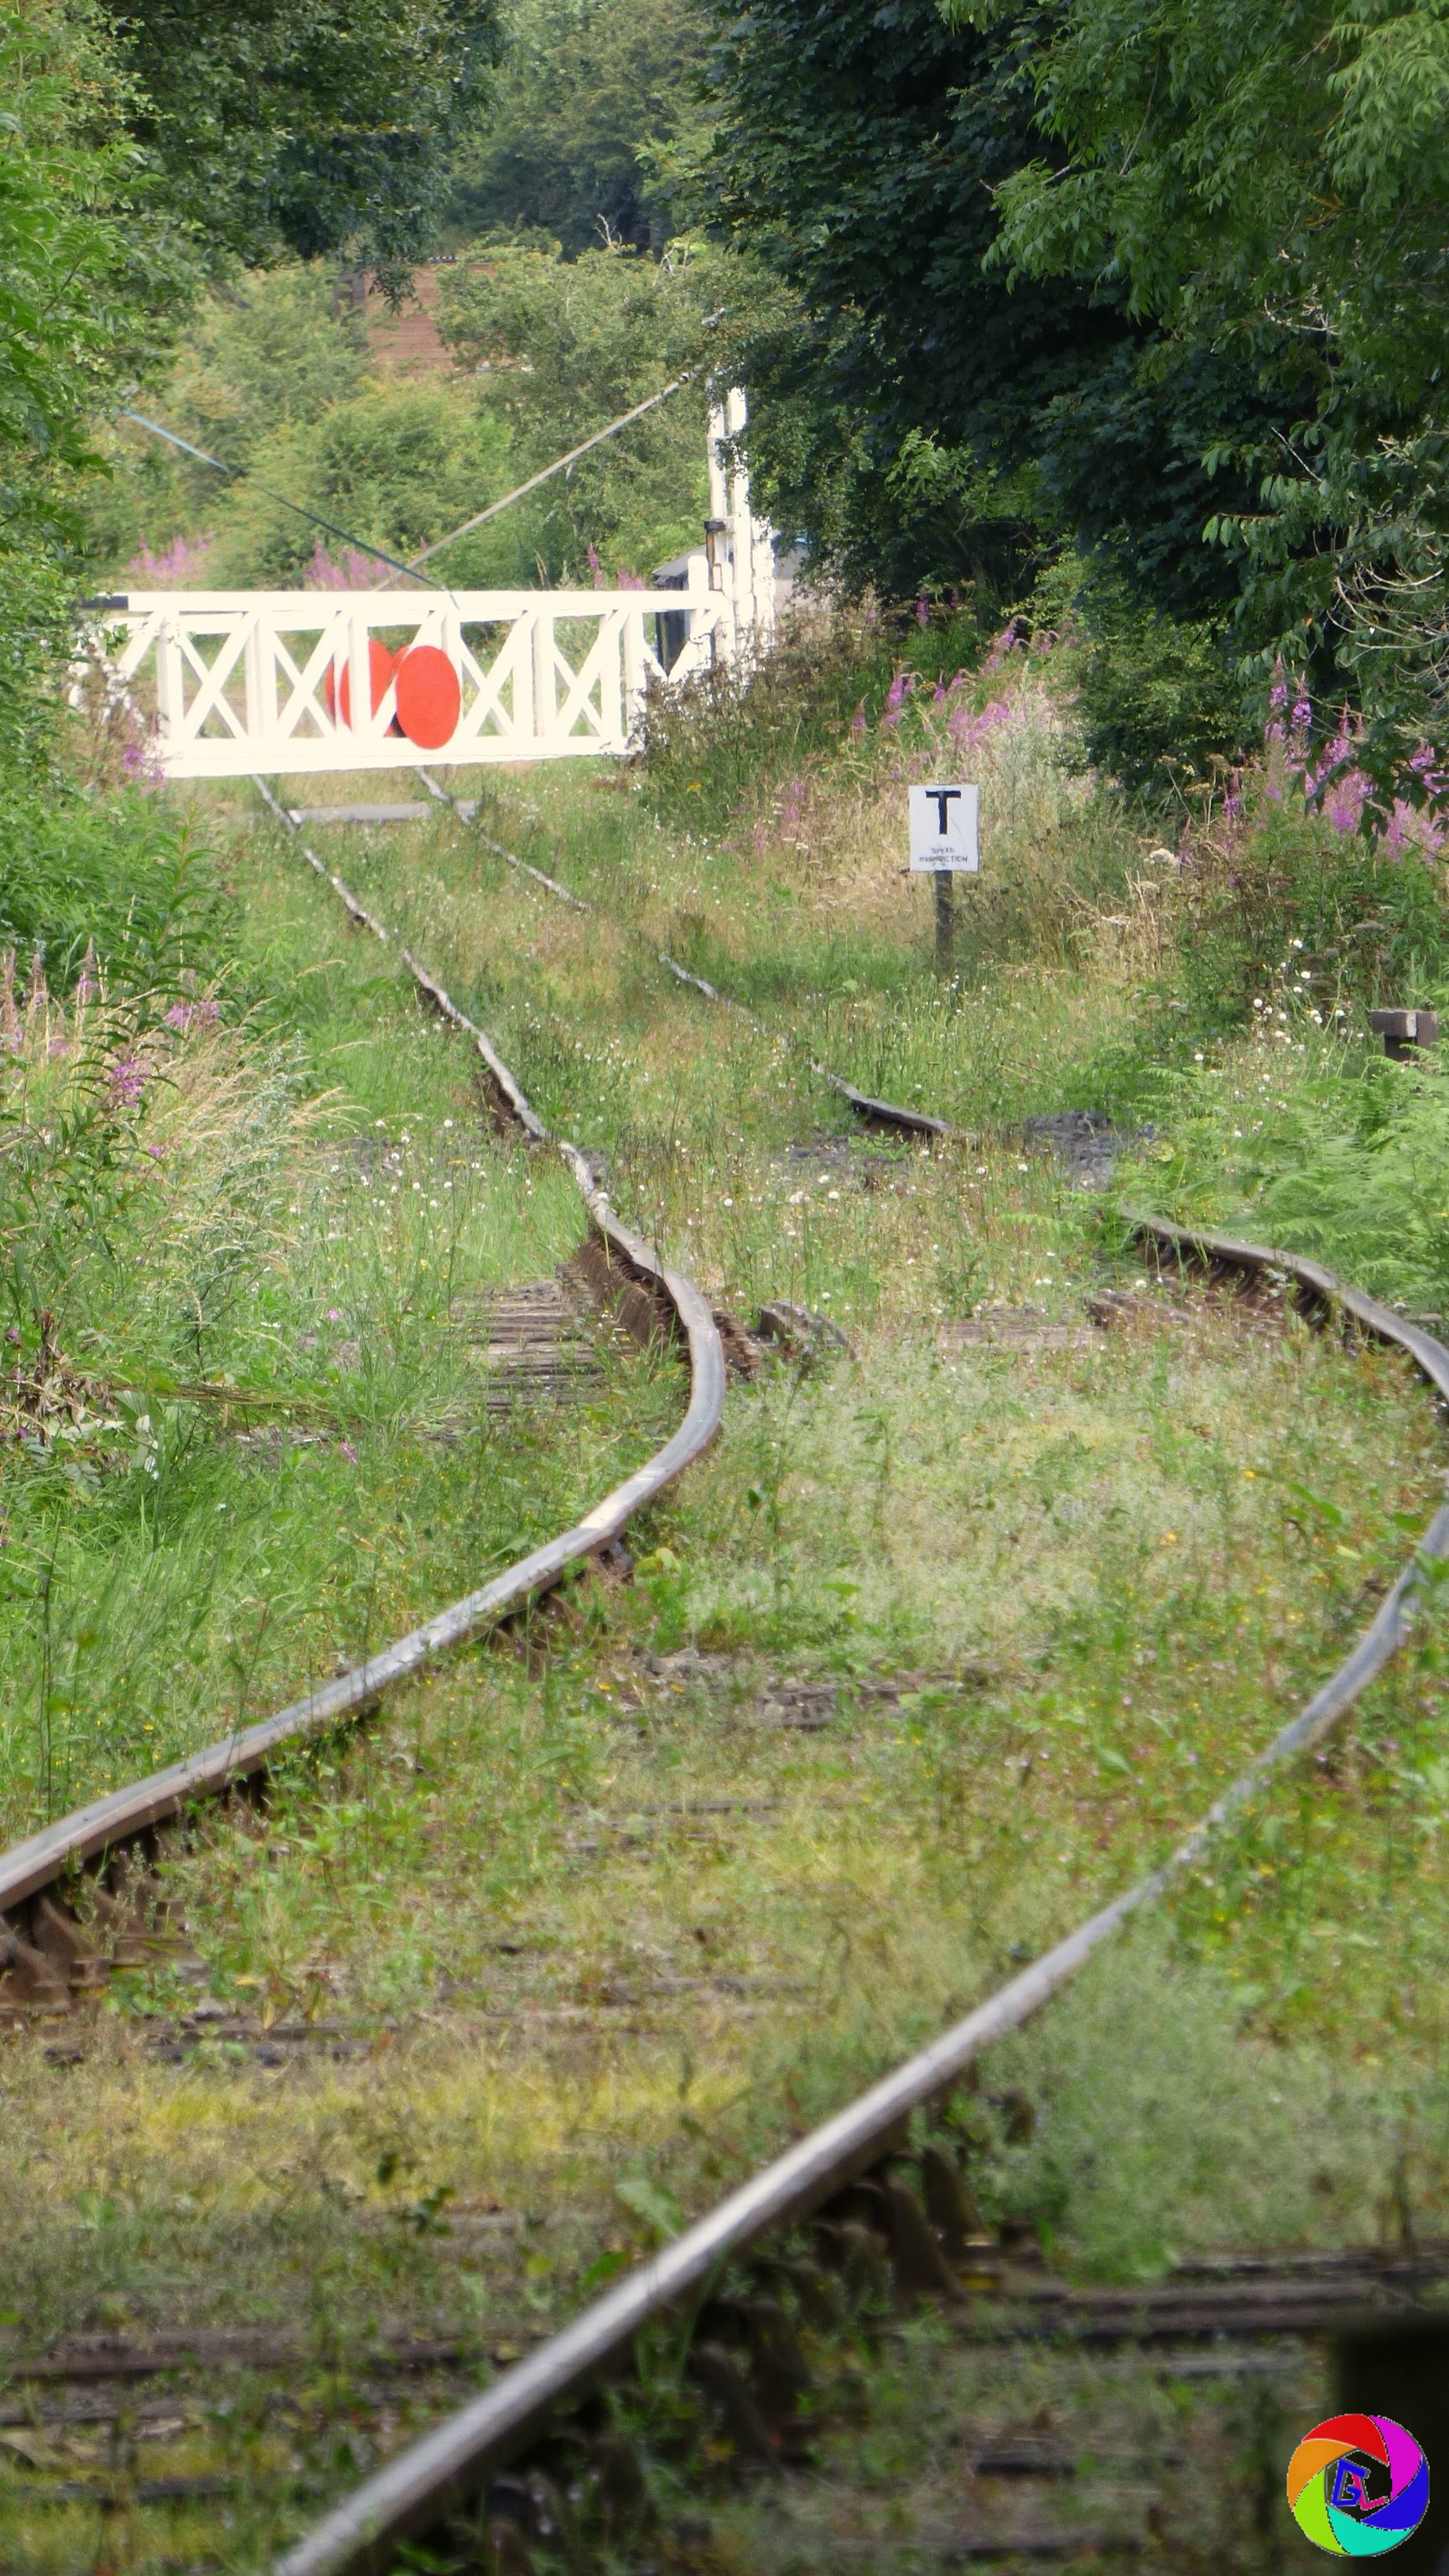 Heritage railway next to Arch